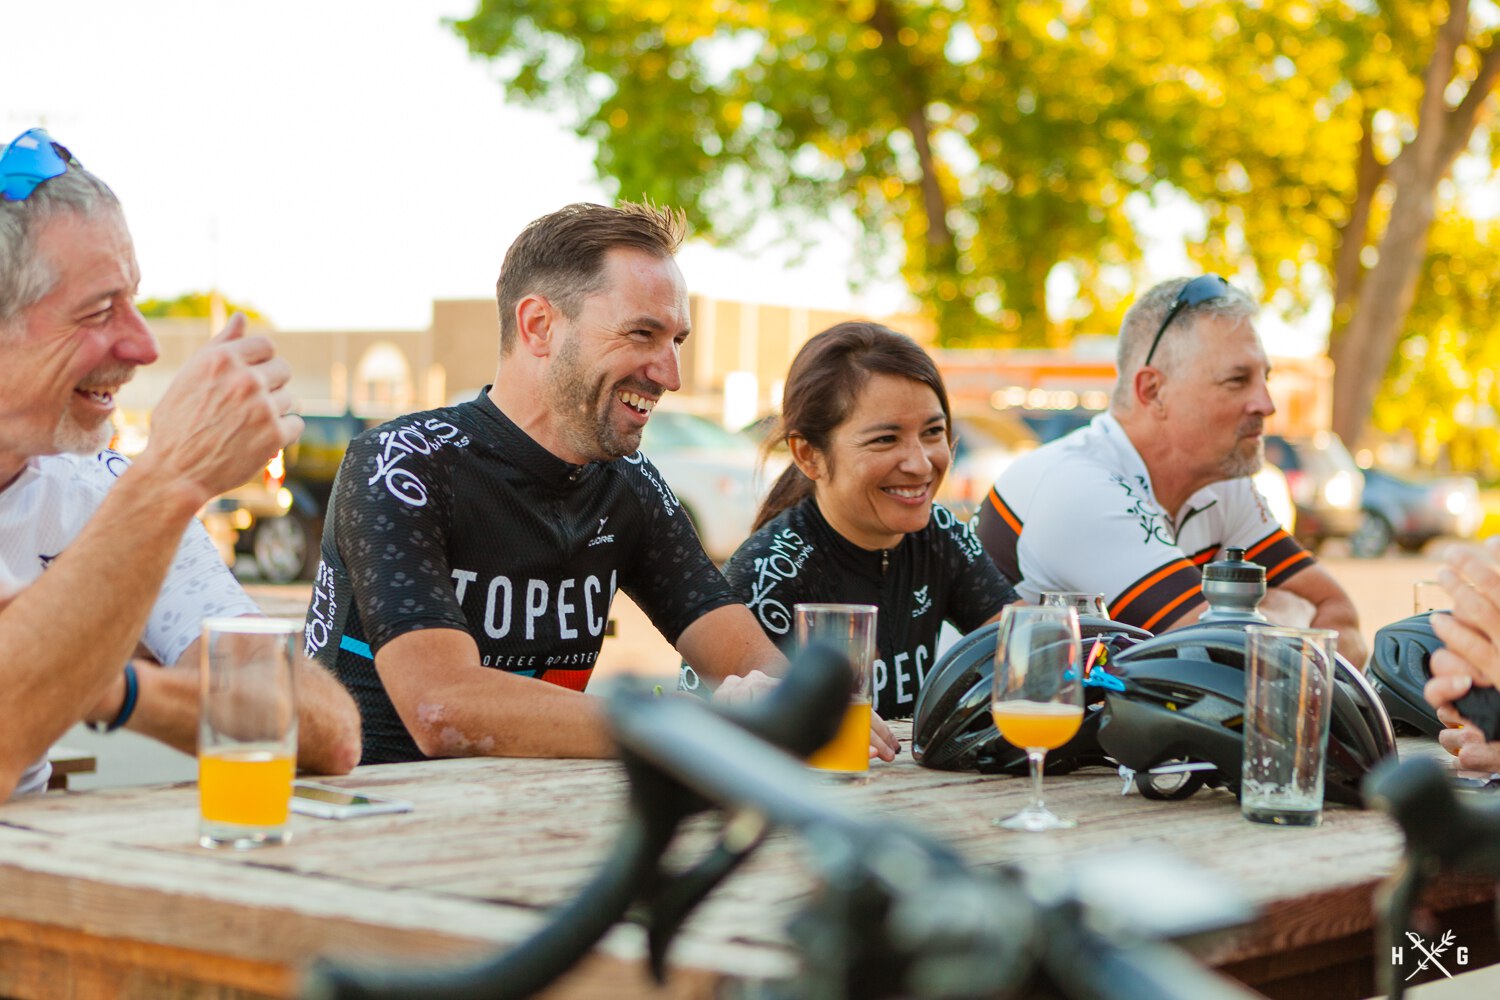 Solera System – Cyclists Revolve Around West Tulsa Brewery